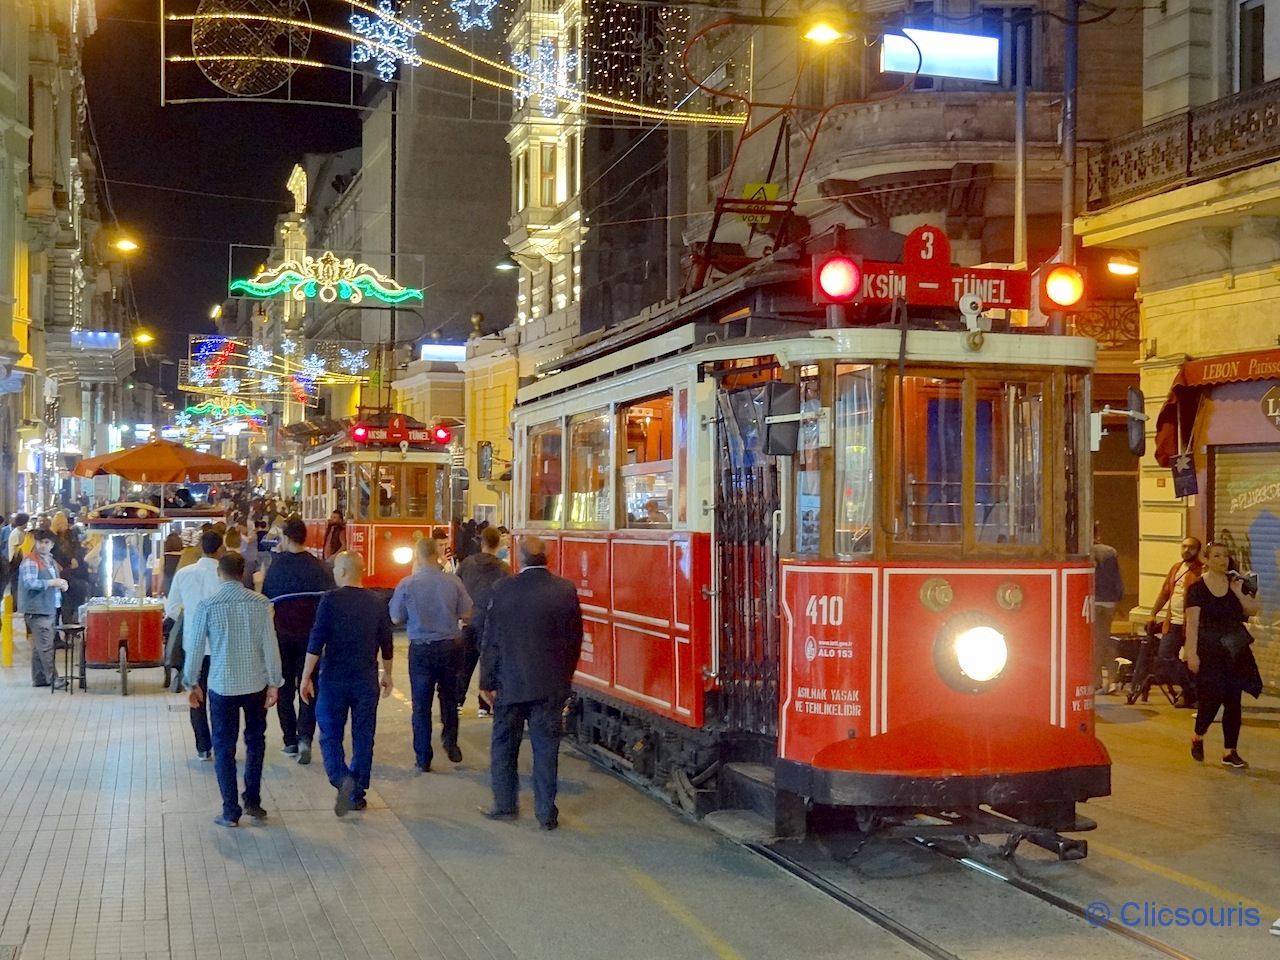 Istanbul tramway